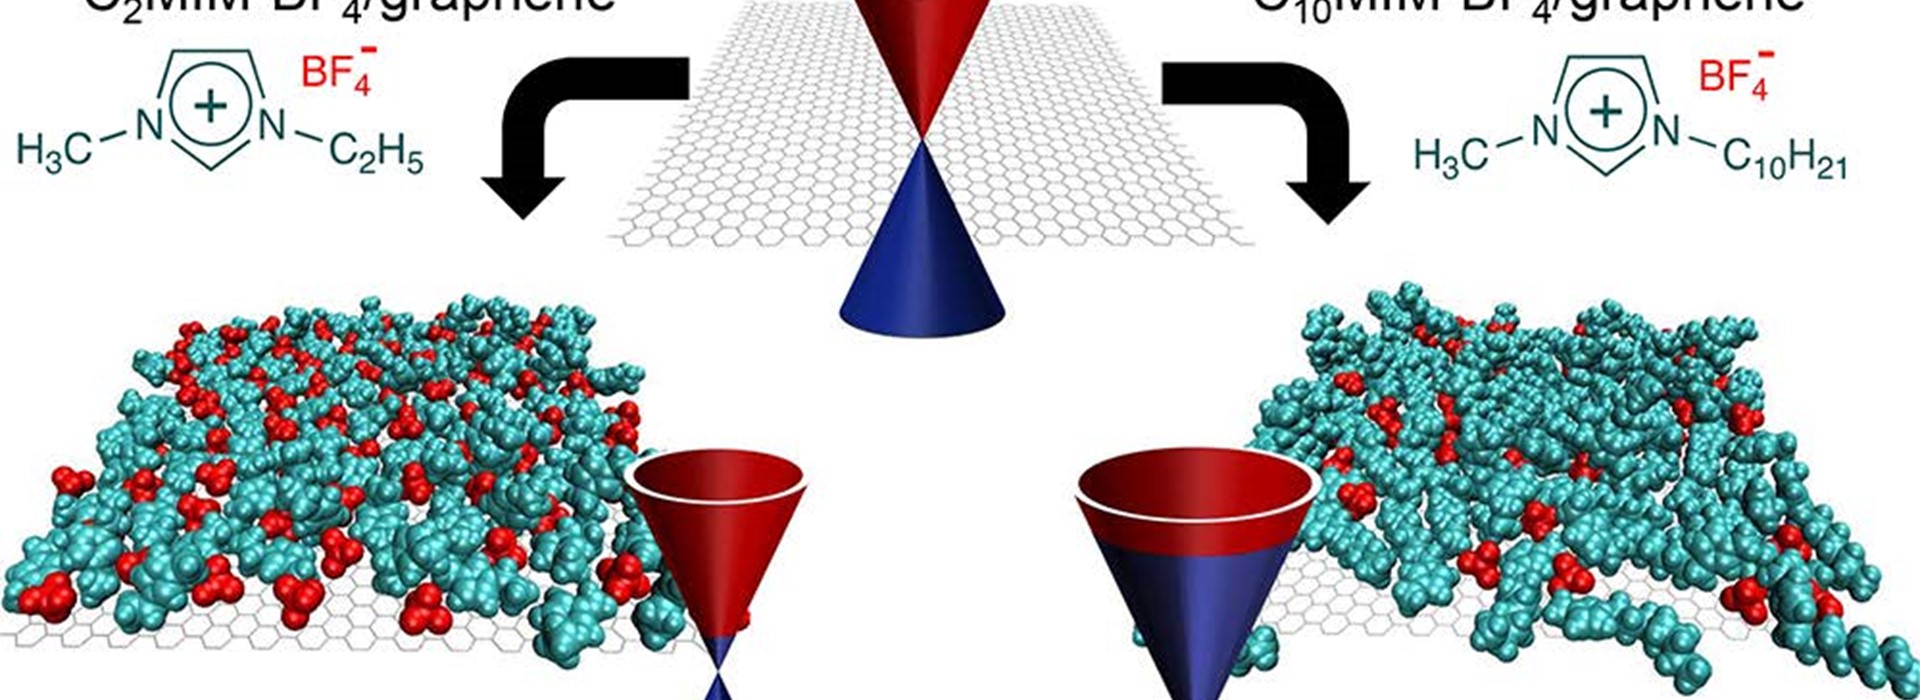 Graphene Meets Ionic Liquids: Fermi Level Engineering via Electrostatic Forces